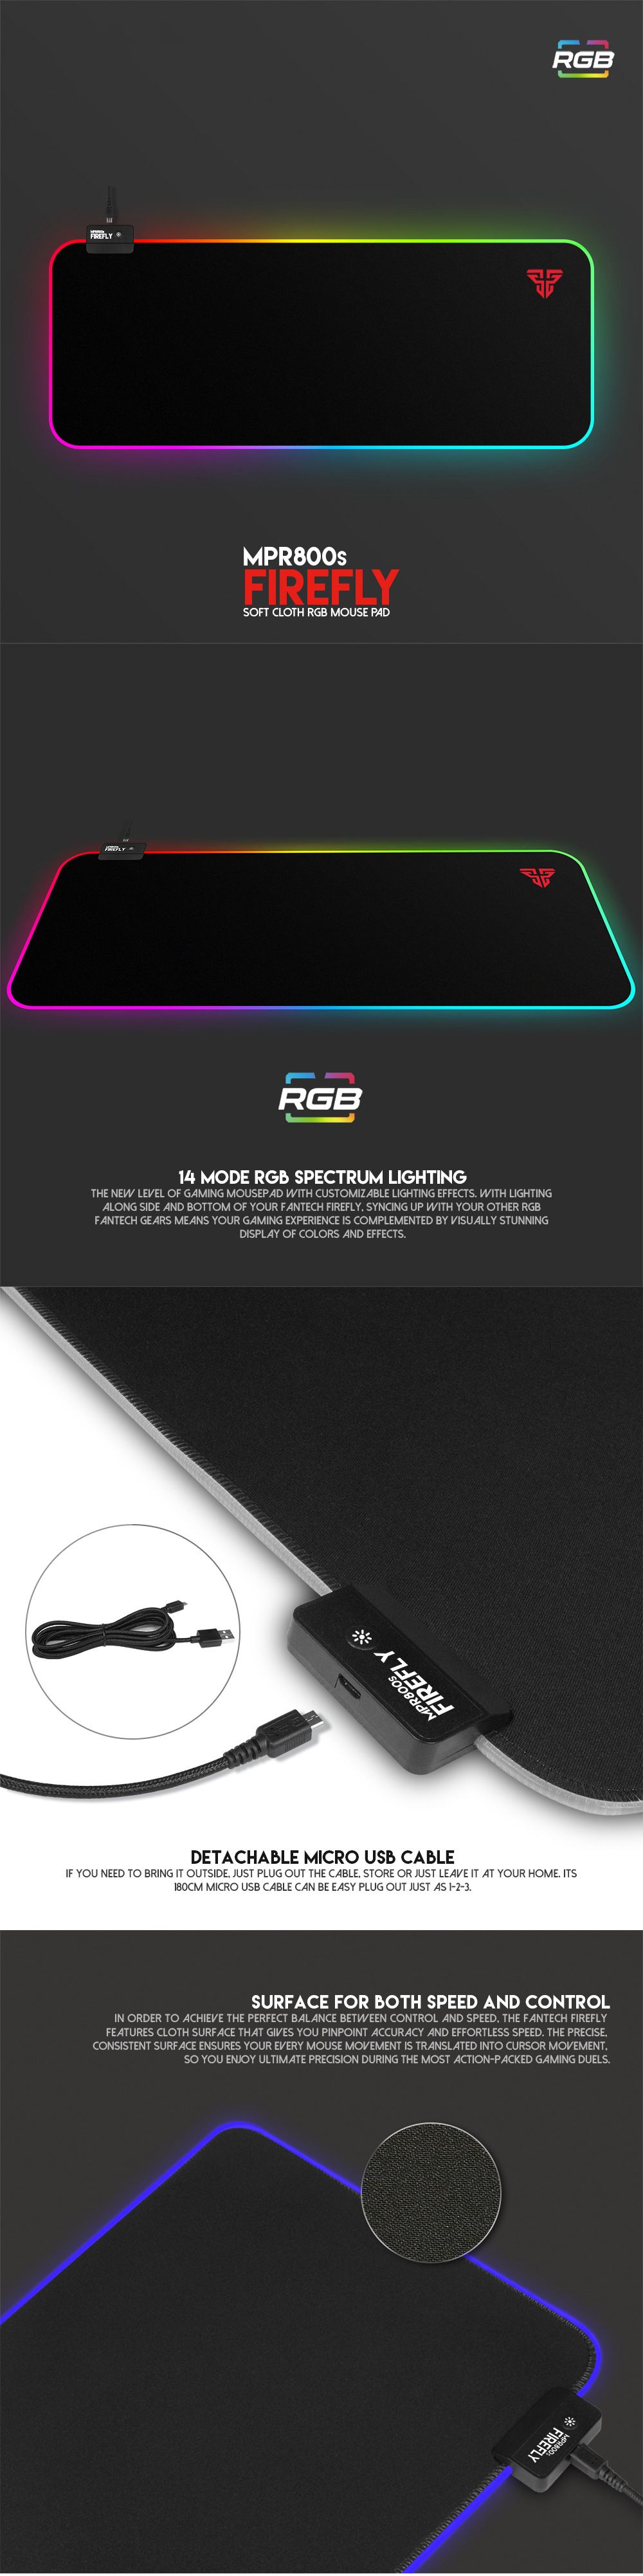 FANTECH-MPR800S-RGB-Mouse-Pad-Professional-Soft-Game-Play-Anti-slip-Mat-Keyboard-Pad-for-LOL-PUBG-Ga-1690605